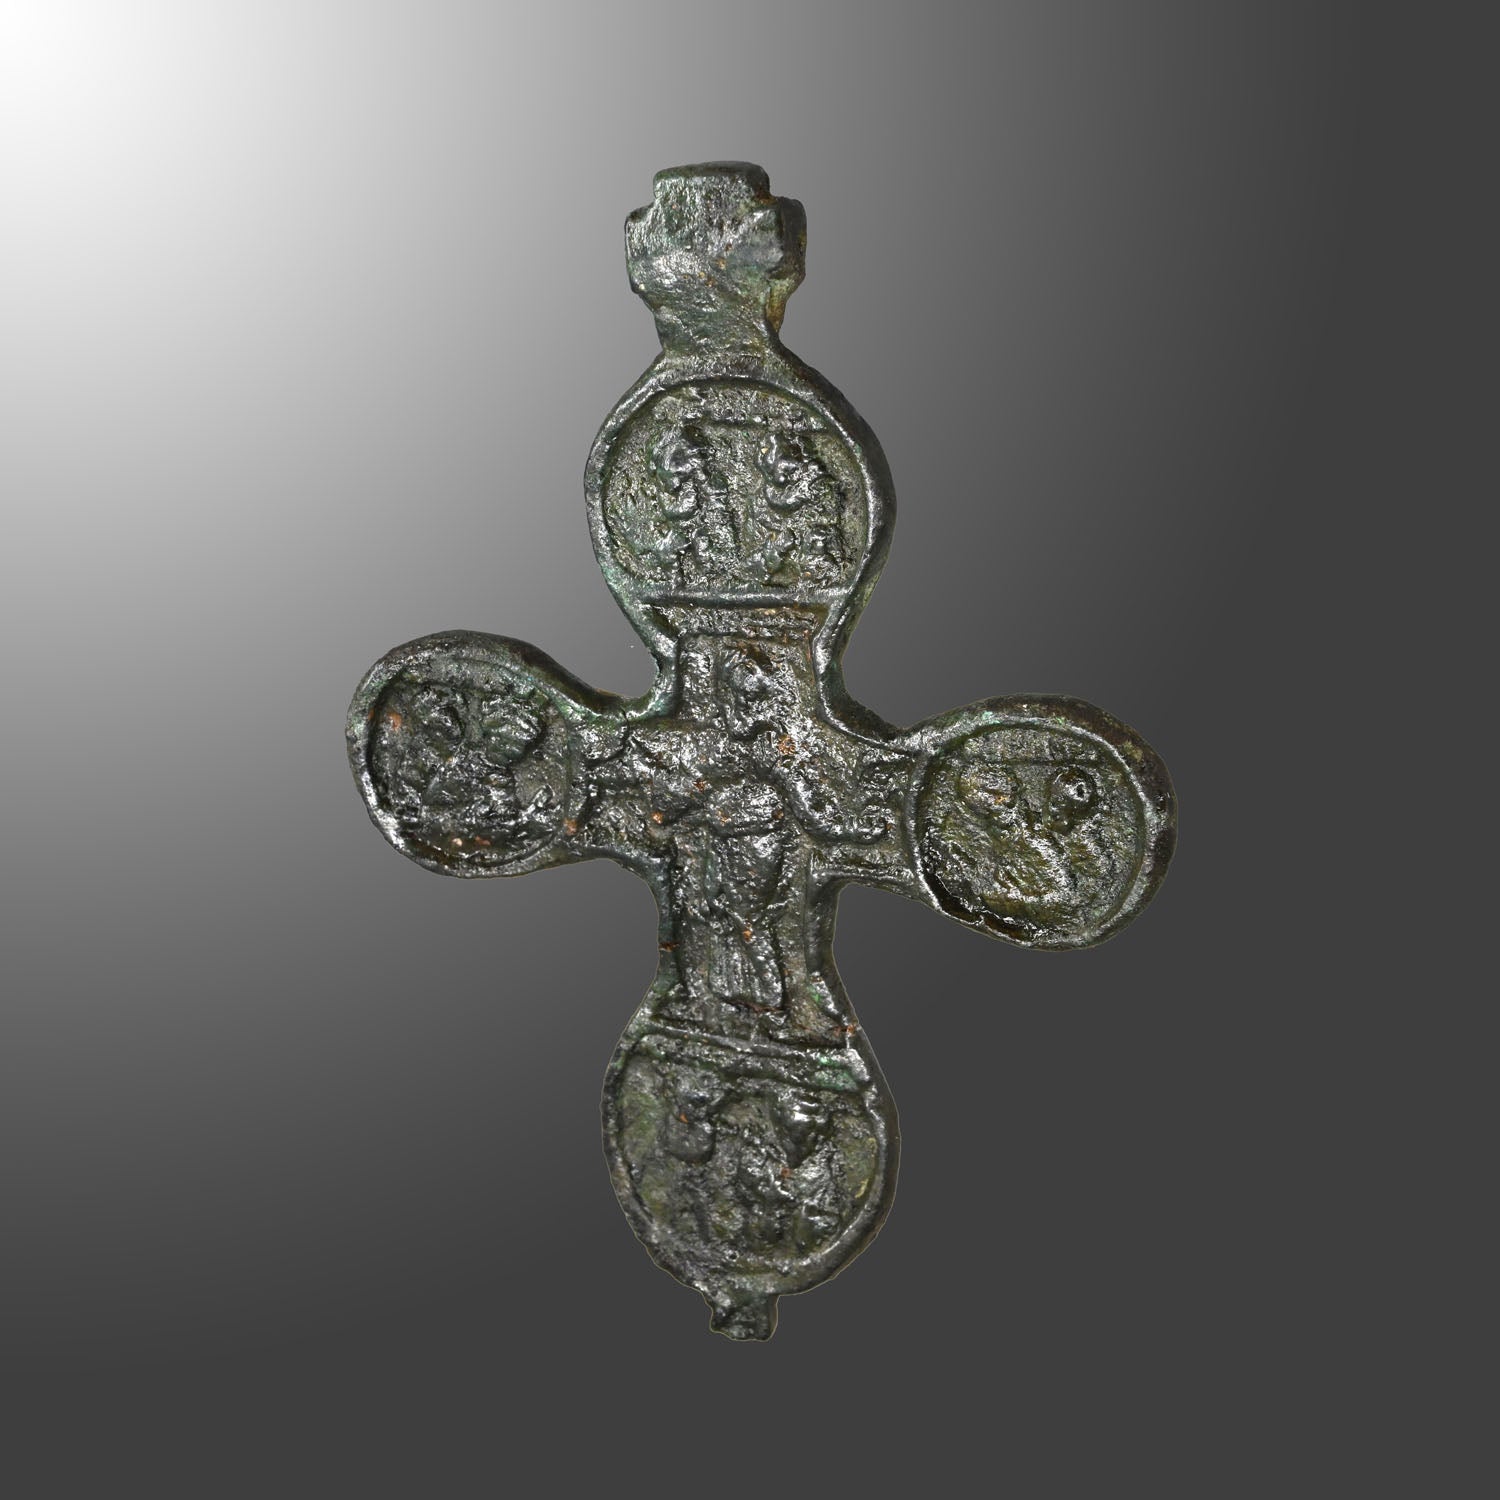 A large Medieval Bronze Cross Pendant, Crusader Period, ca. 1000 - 1500 CE